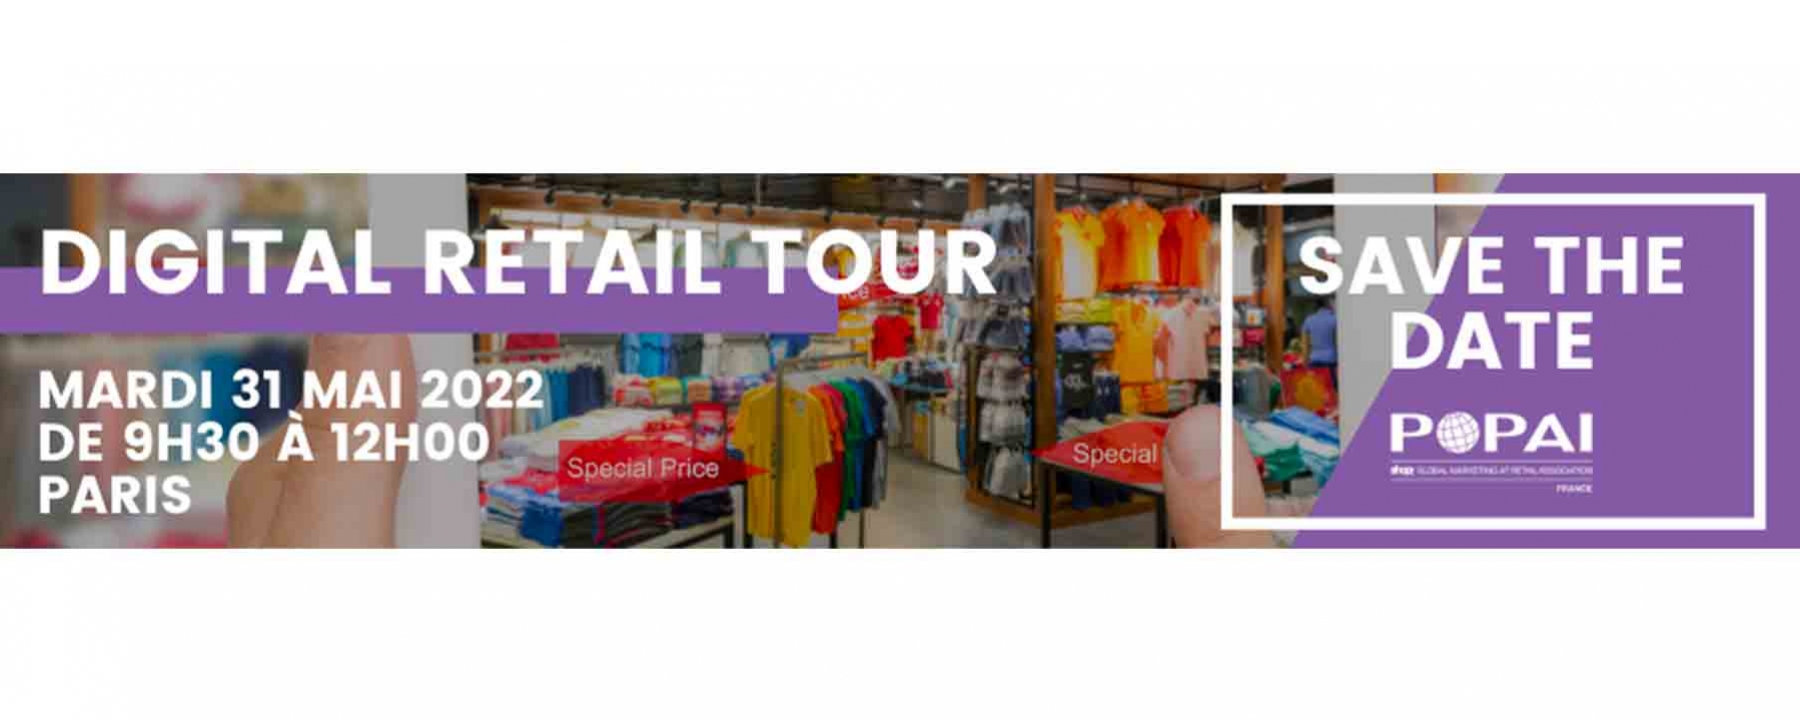 Digital Retail Tour POPAI 31 mai 2022